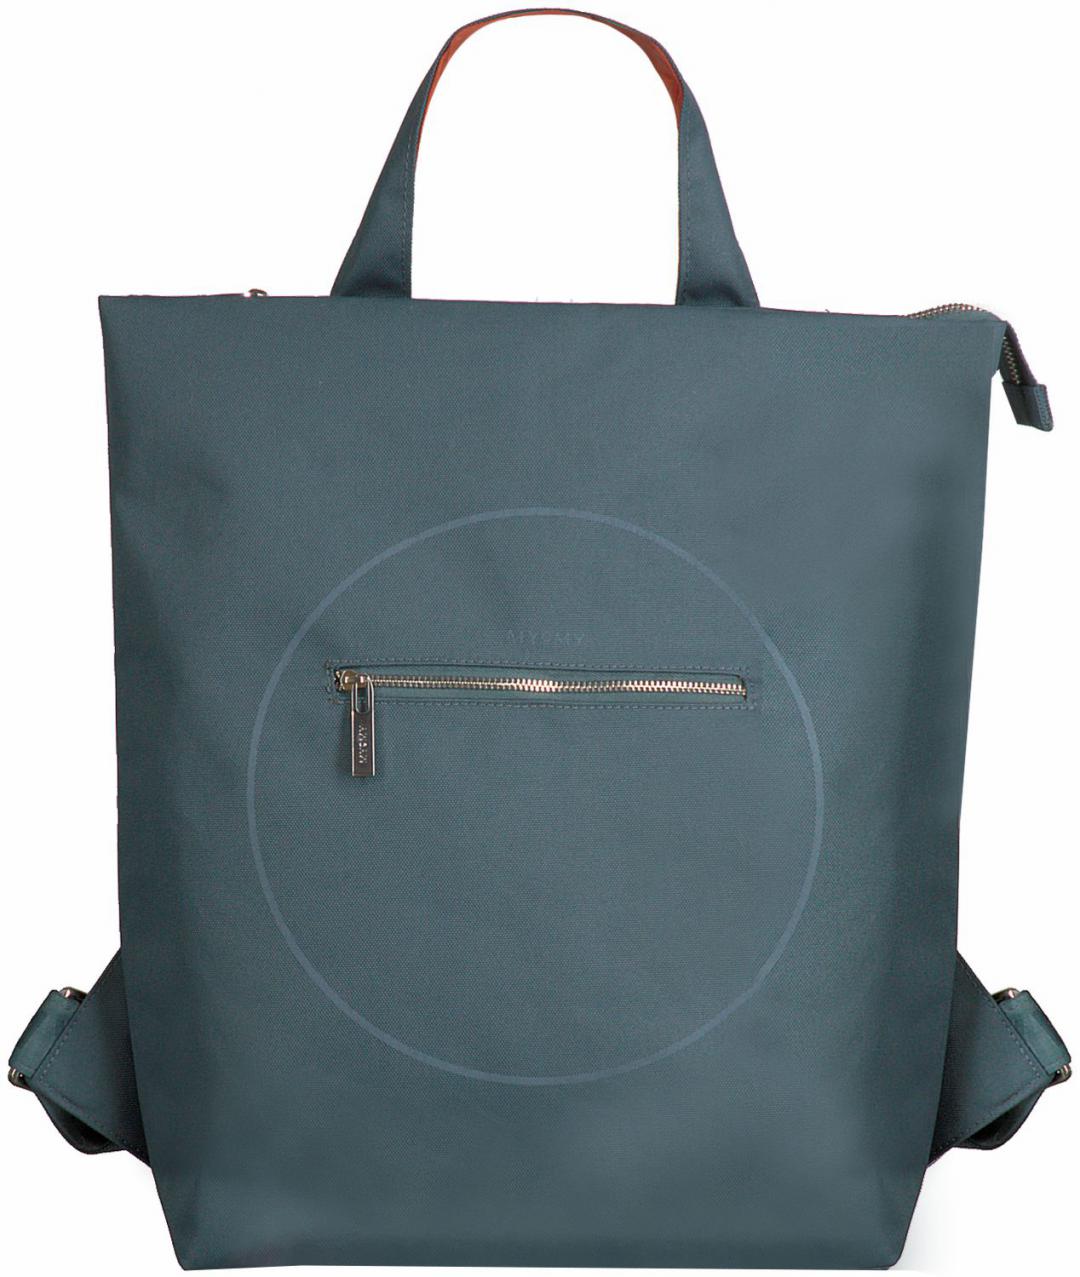 Backpack Medium 23x10x31cm by Sarenza Damen Accessoires Taschen Rucksäcke 